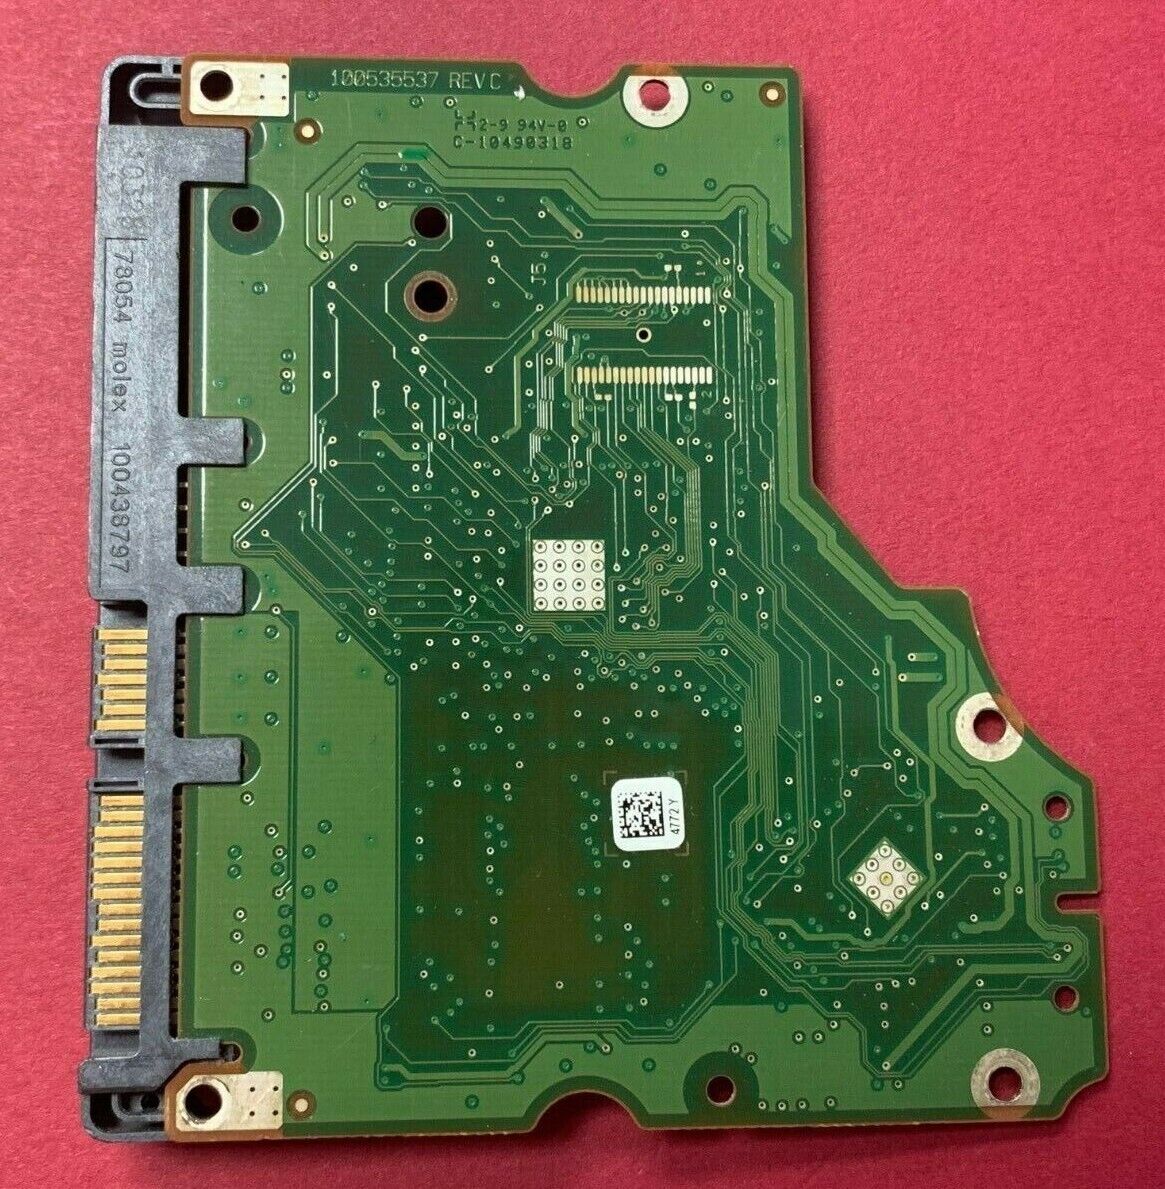 Seagate Hard Disk Circuit Logic Board PCB ONLY 100535537 REV C 